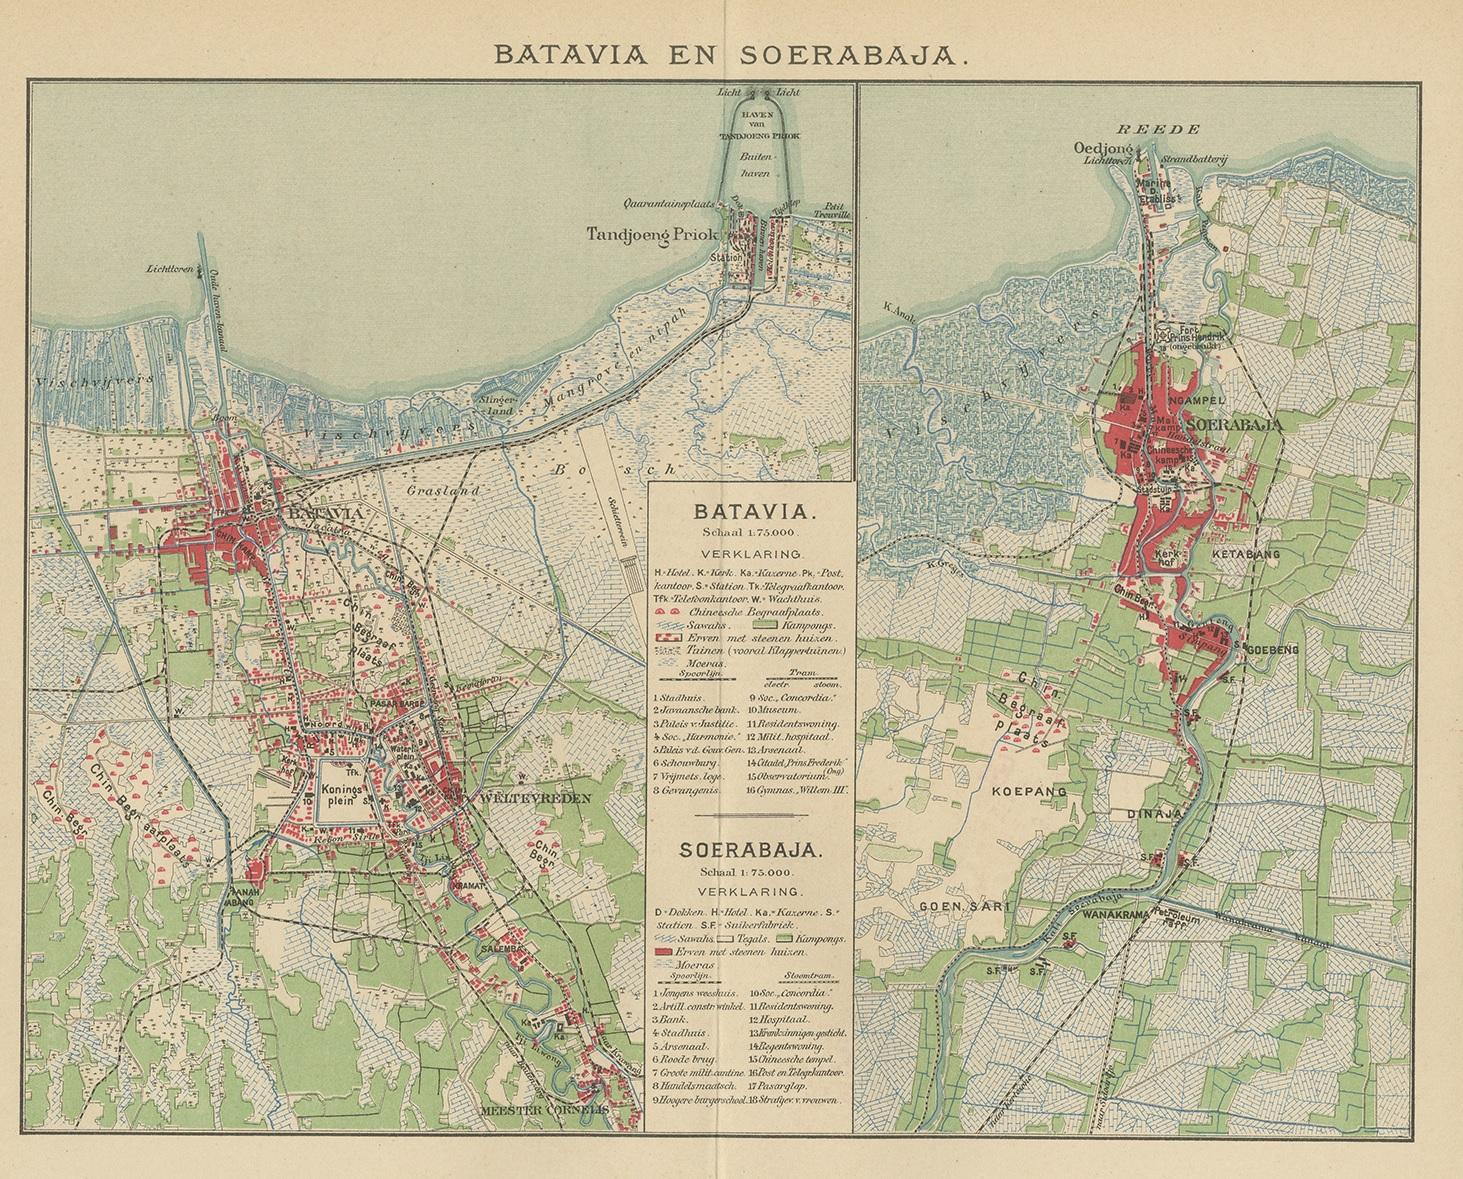 Antique map titled 'Batavia en Soerabaja'. Detailed plan of Batavia (Jakarta) and Soerabaja (Surabaya), Indonesia. The plans include important places like Tandjoeng Priok, Oedjong, Weltevreden, Ngampel, Keta Bang, Goebeng, Koepang, Goen Sari and